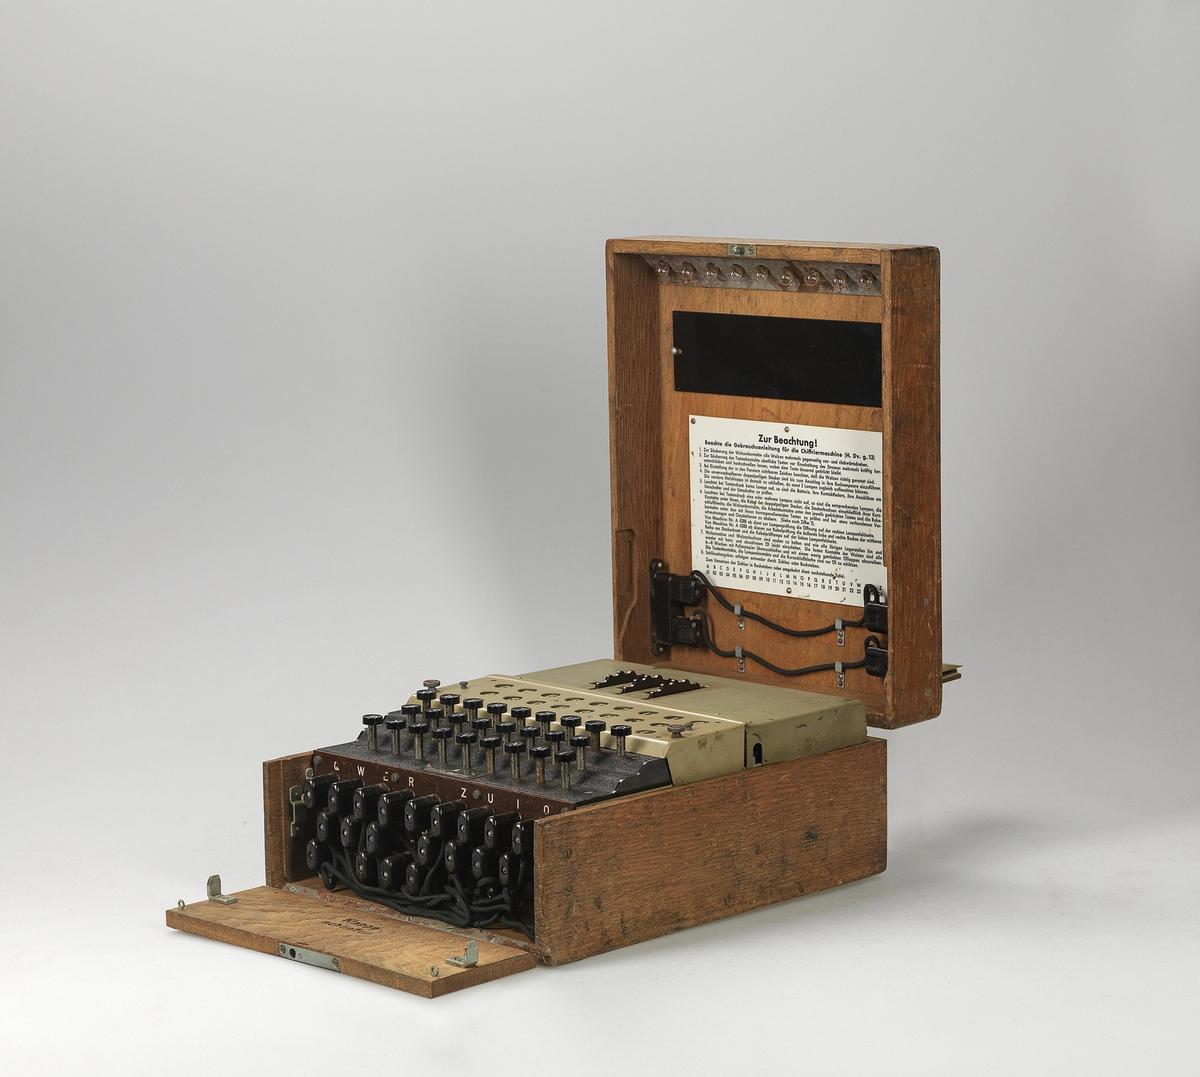 Code-cracking lot: Second World War Enigma machine on offer at Vienna's  Dorotheum